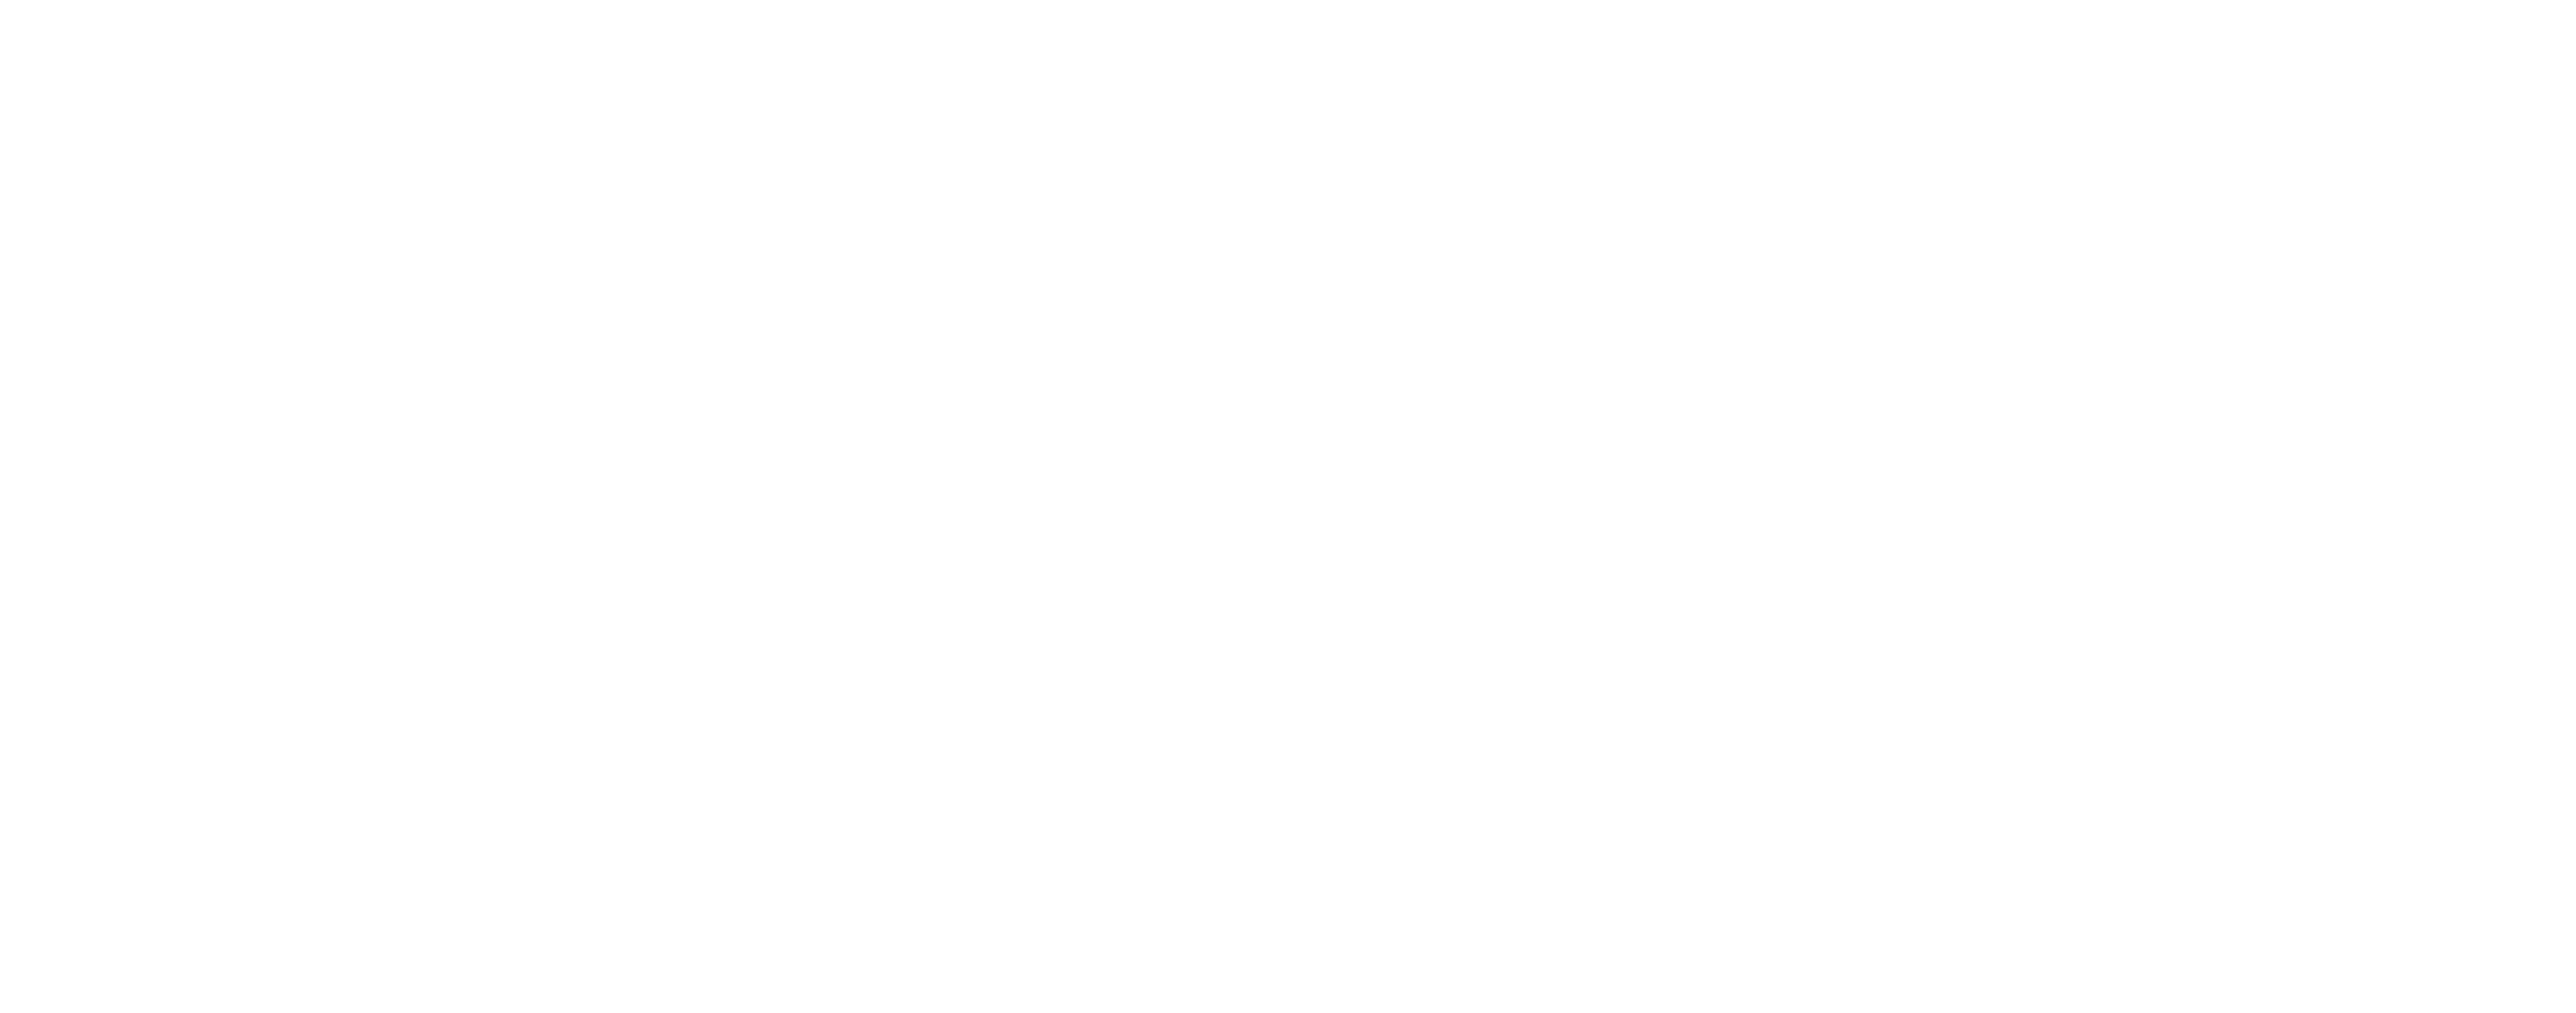 Albuquerque Community Foundation Logo. Trust, equity, integrity, accountability